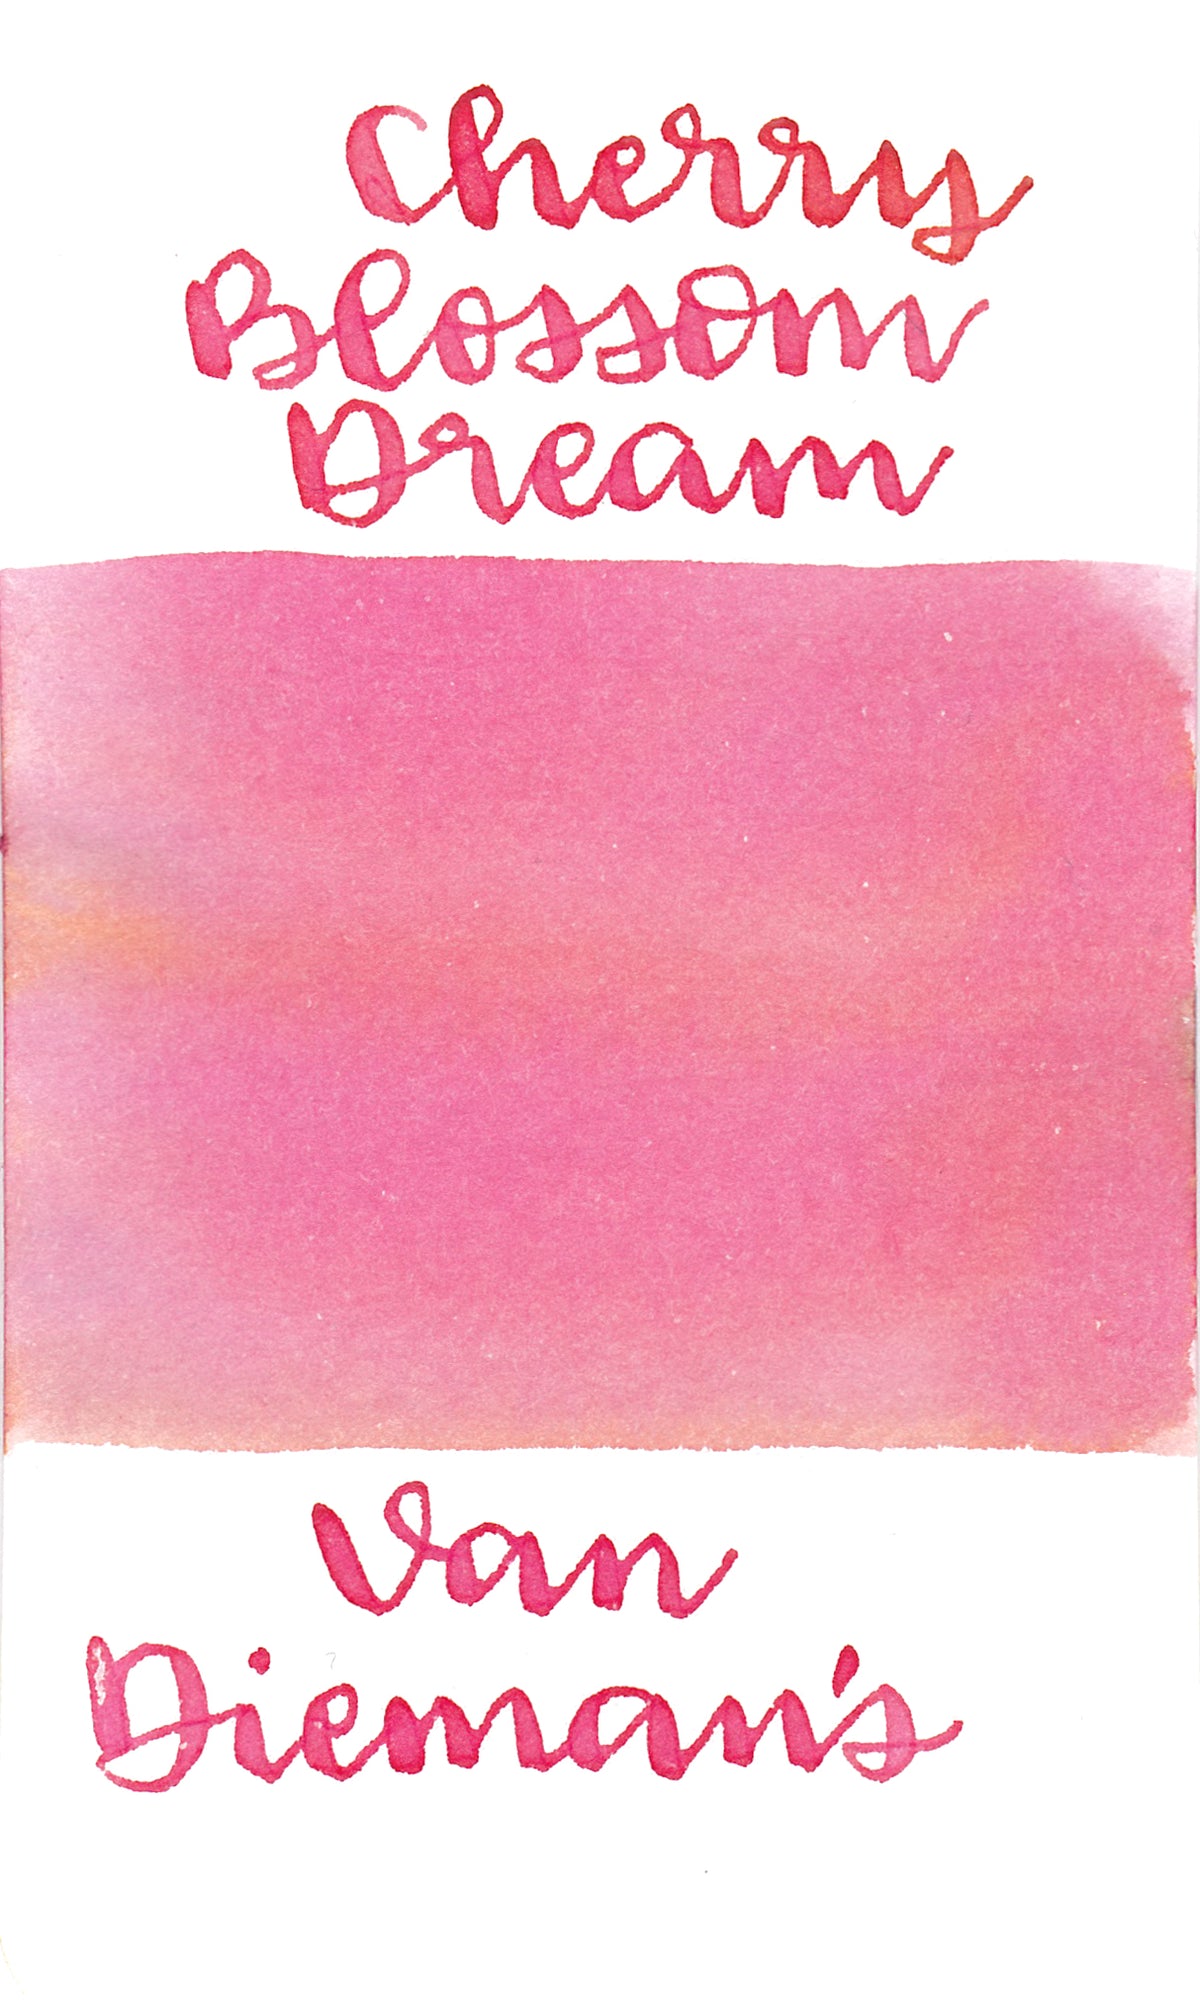 Van Dieman's Night Series- Cherry Blossom Dream